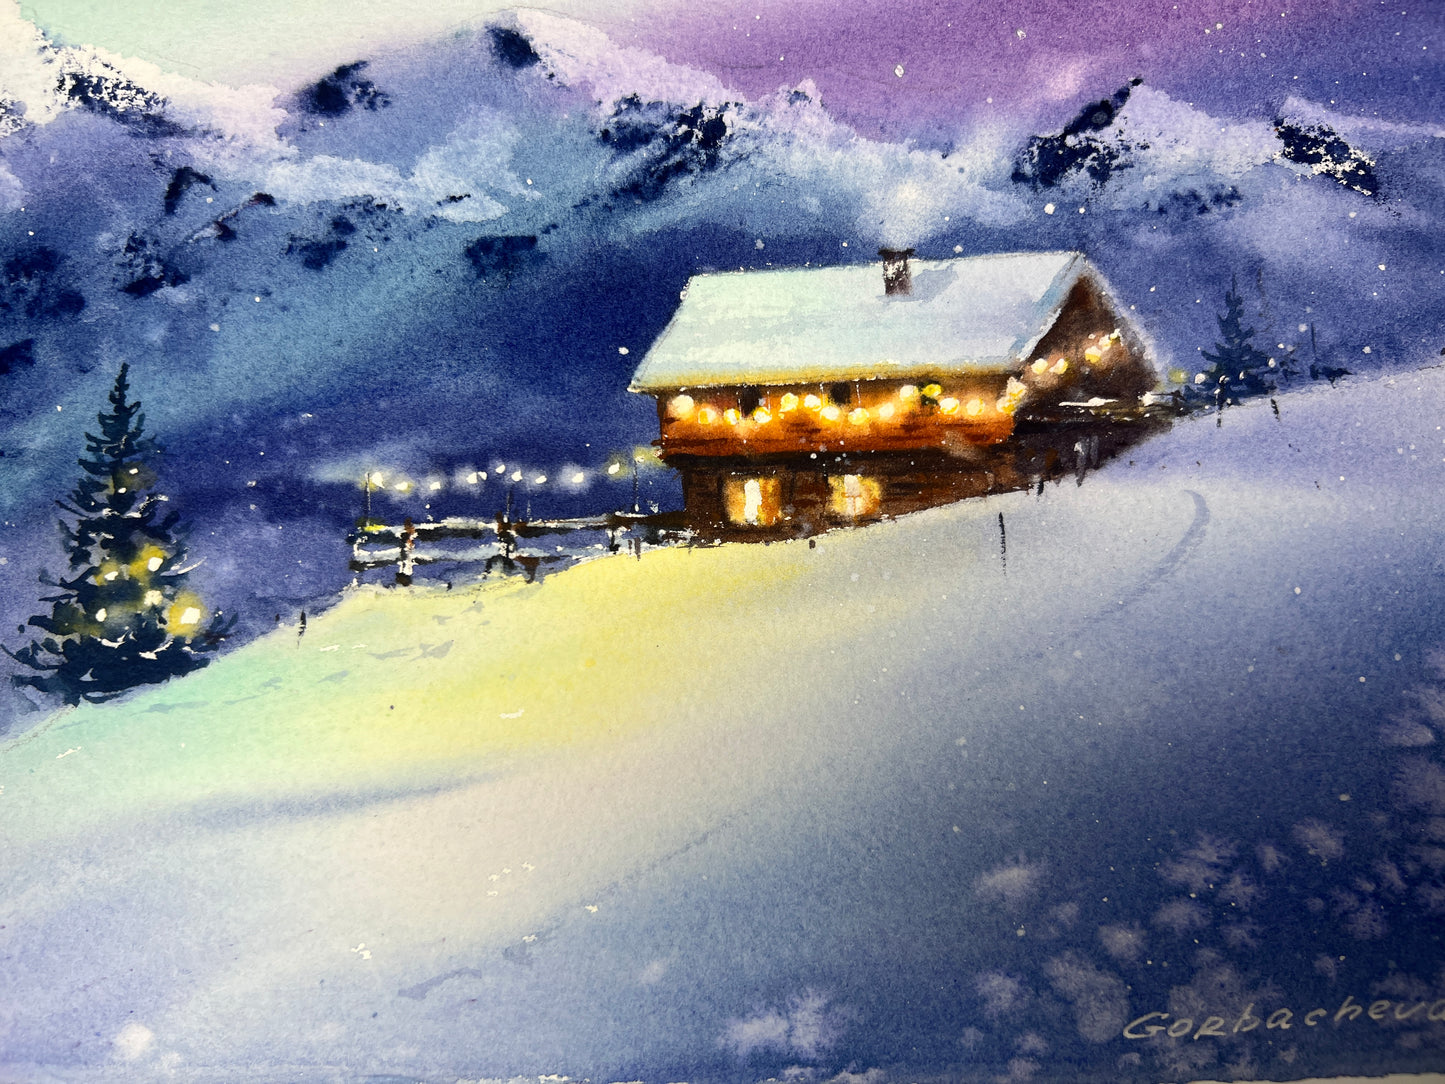 Christmas Painting, Santa Claus Deer Art Decor, Small Original Artwork, Northern lights, Aurora Borealis, Night Sky